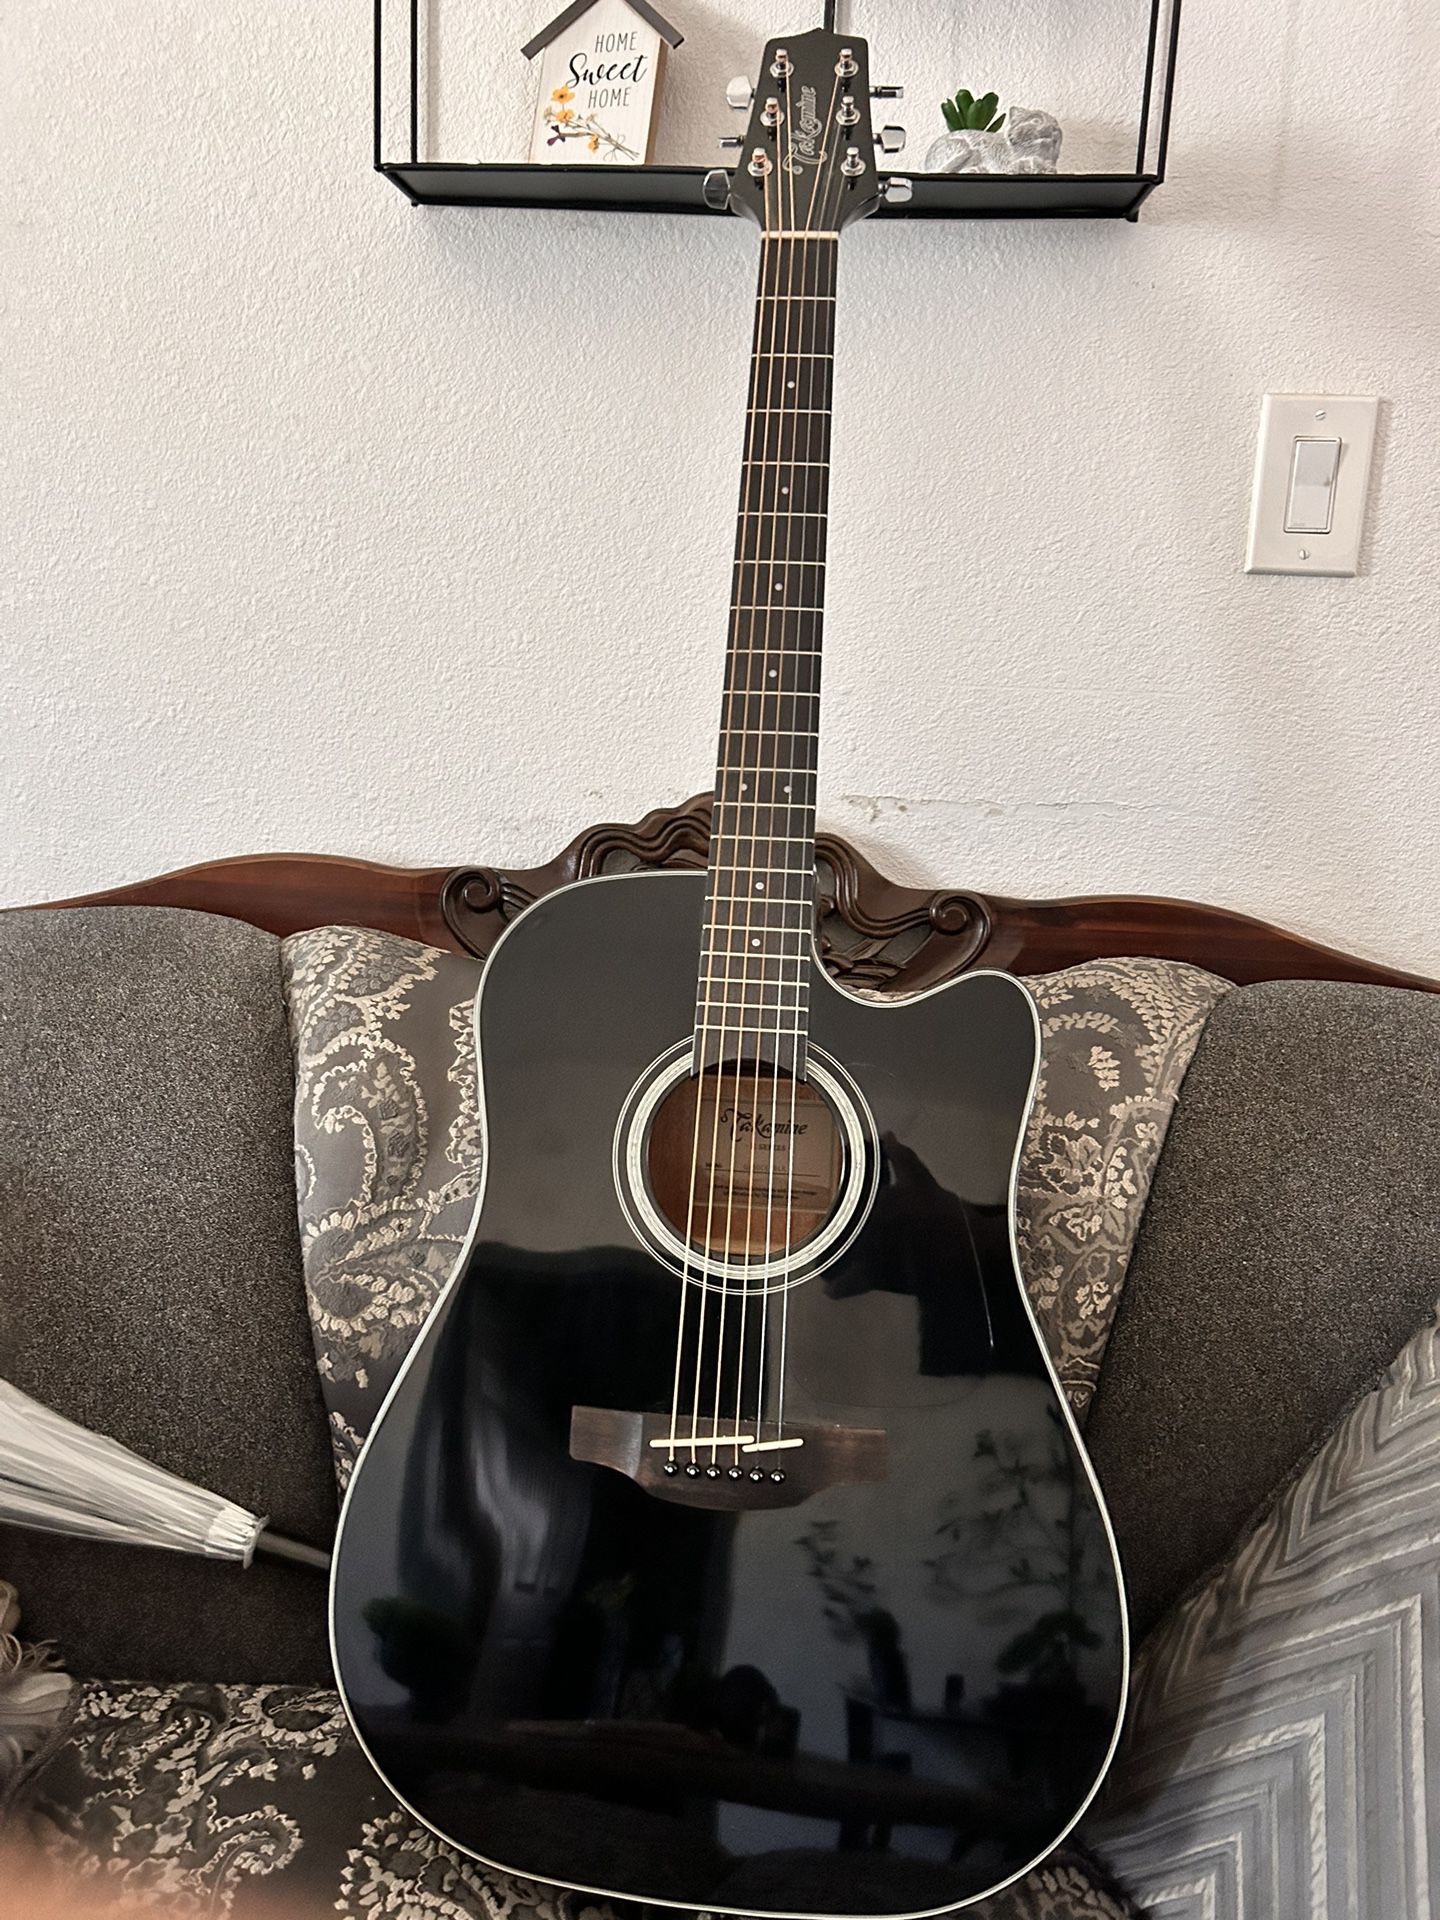 Takamine Acoustic Guitar 